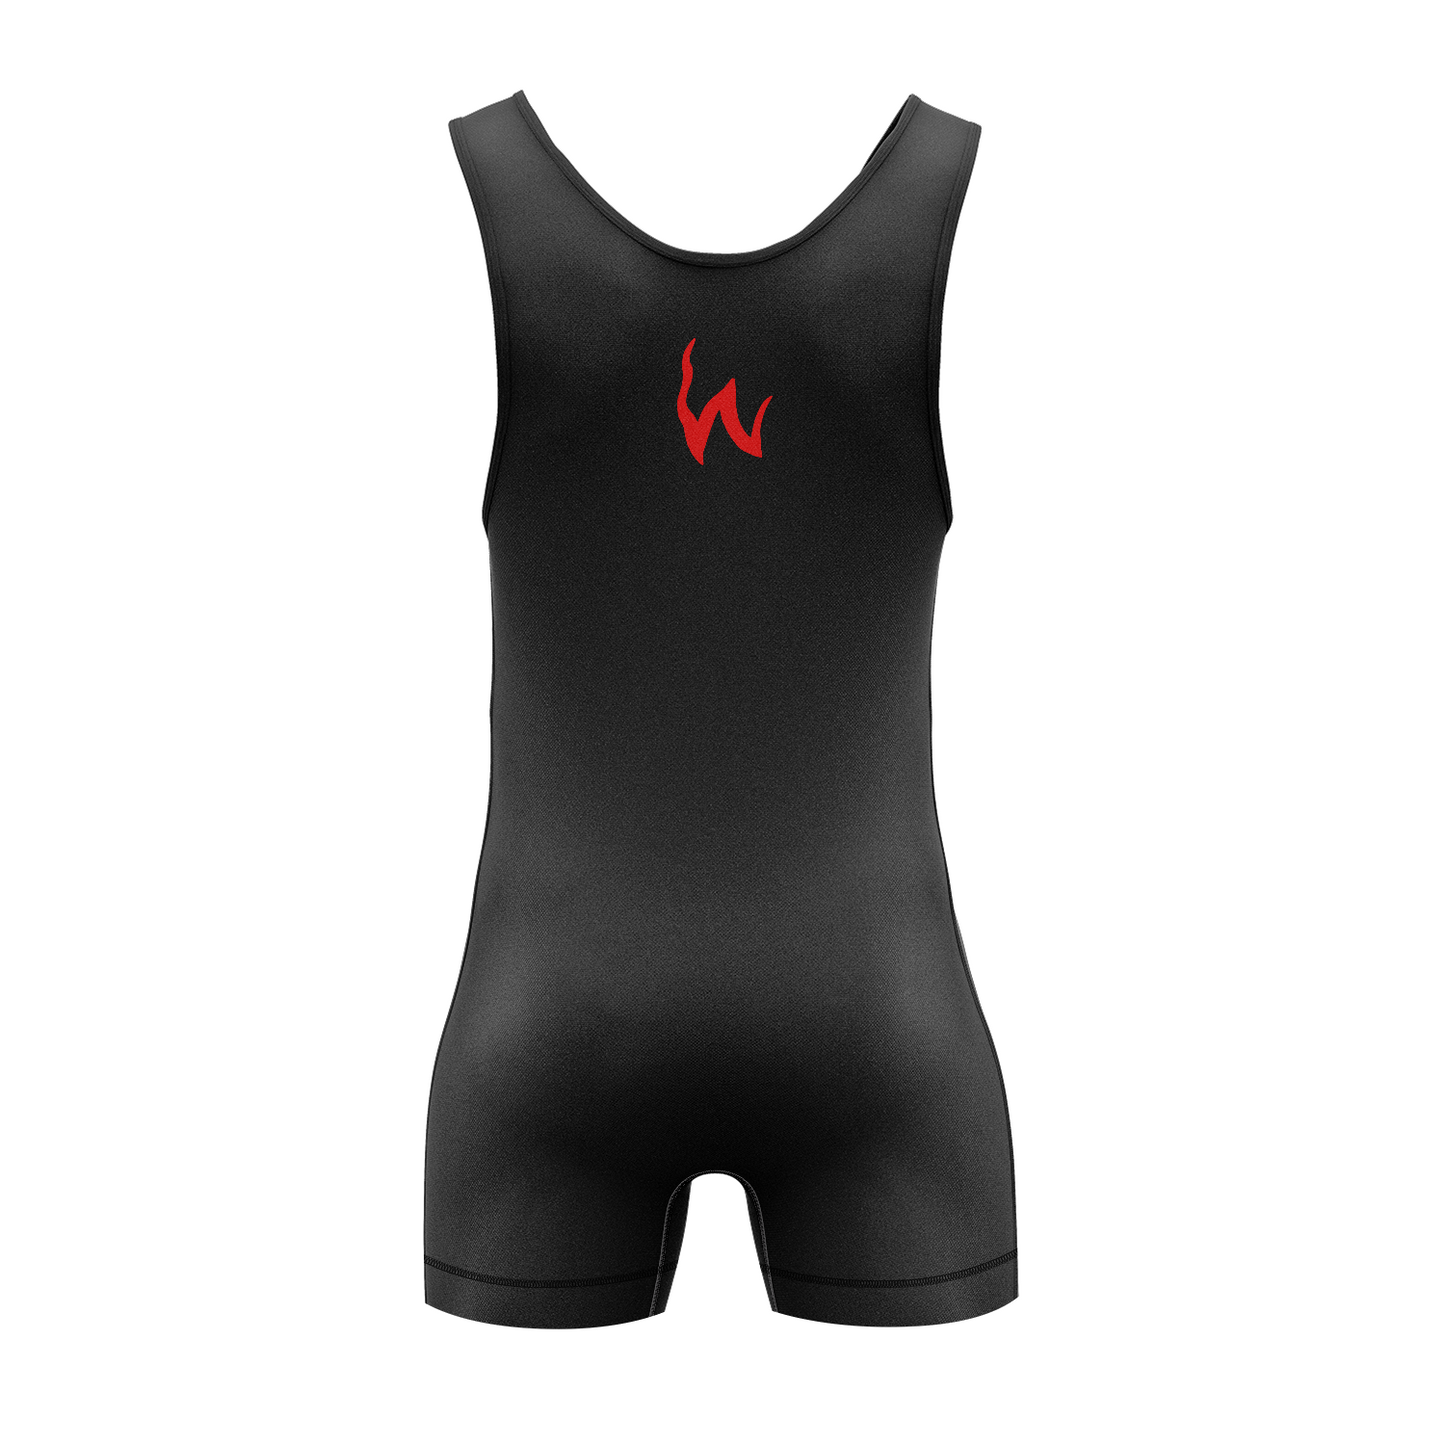 Wildcat Wrestling Club men's singlet Standard Issue, red on black